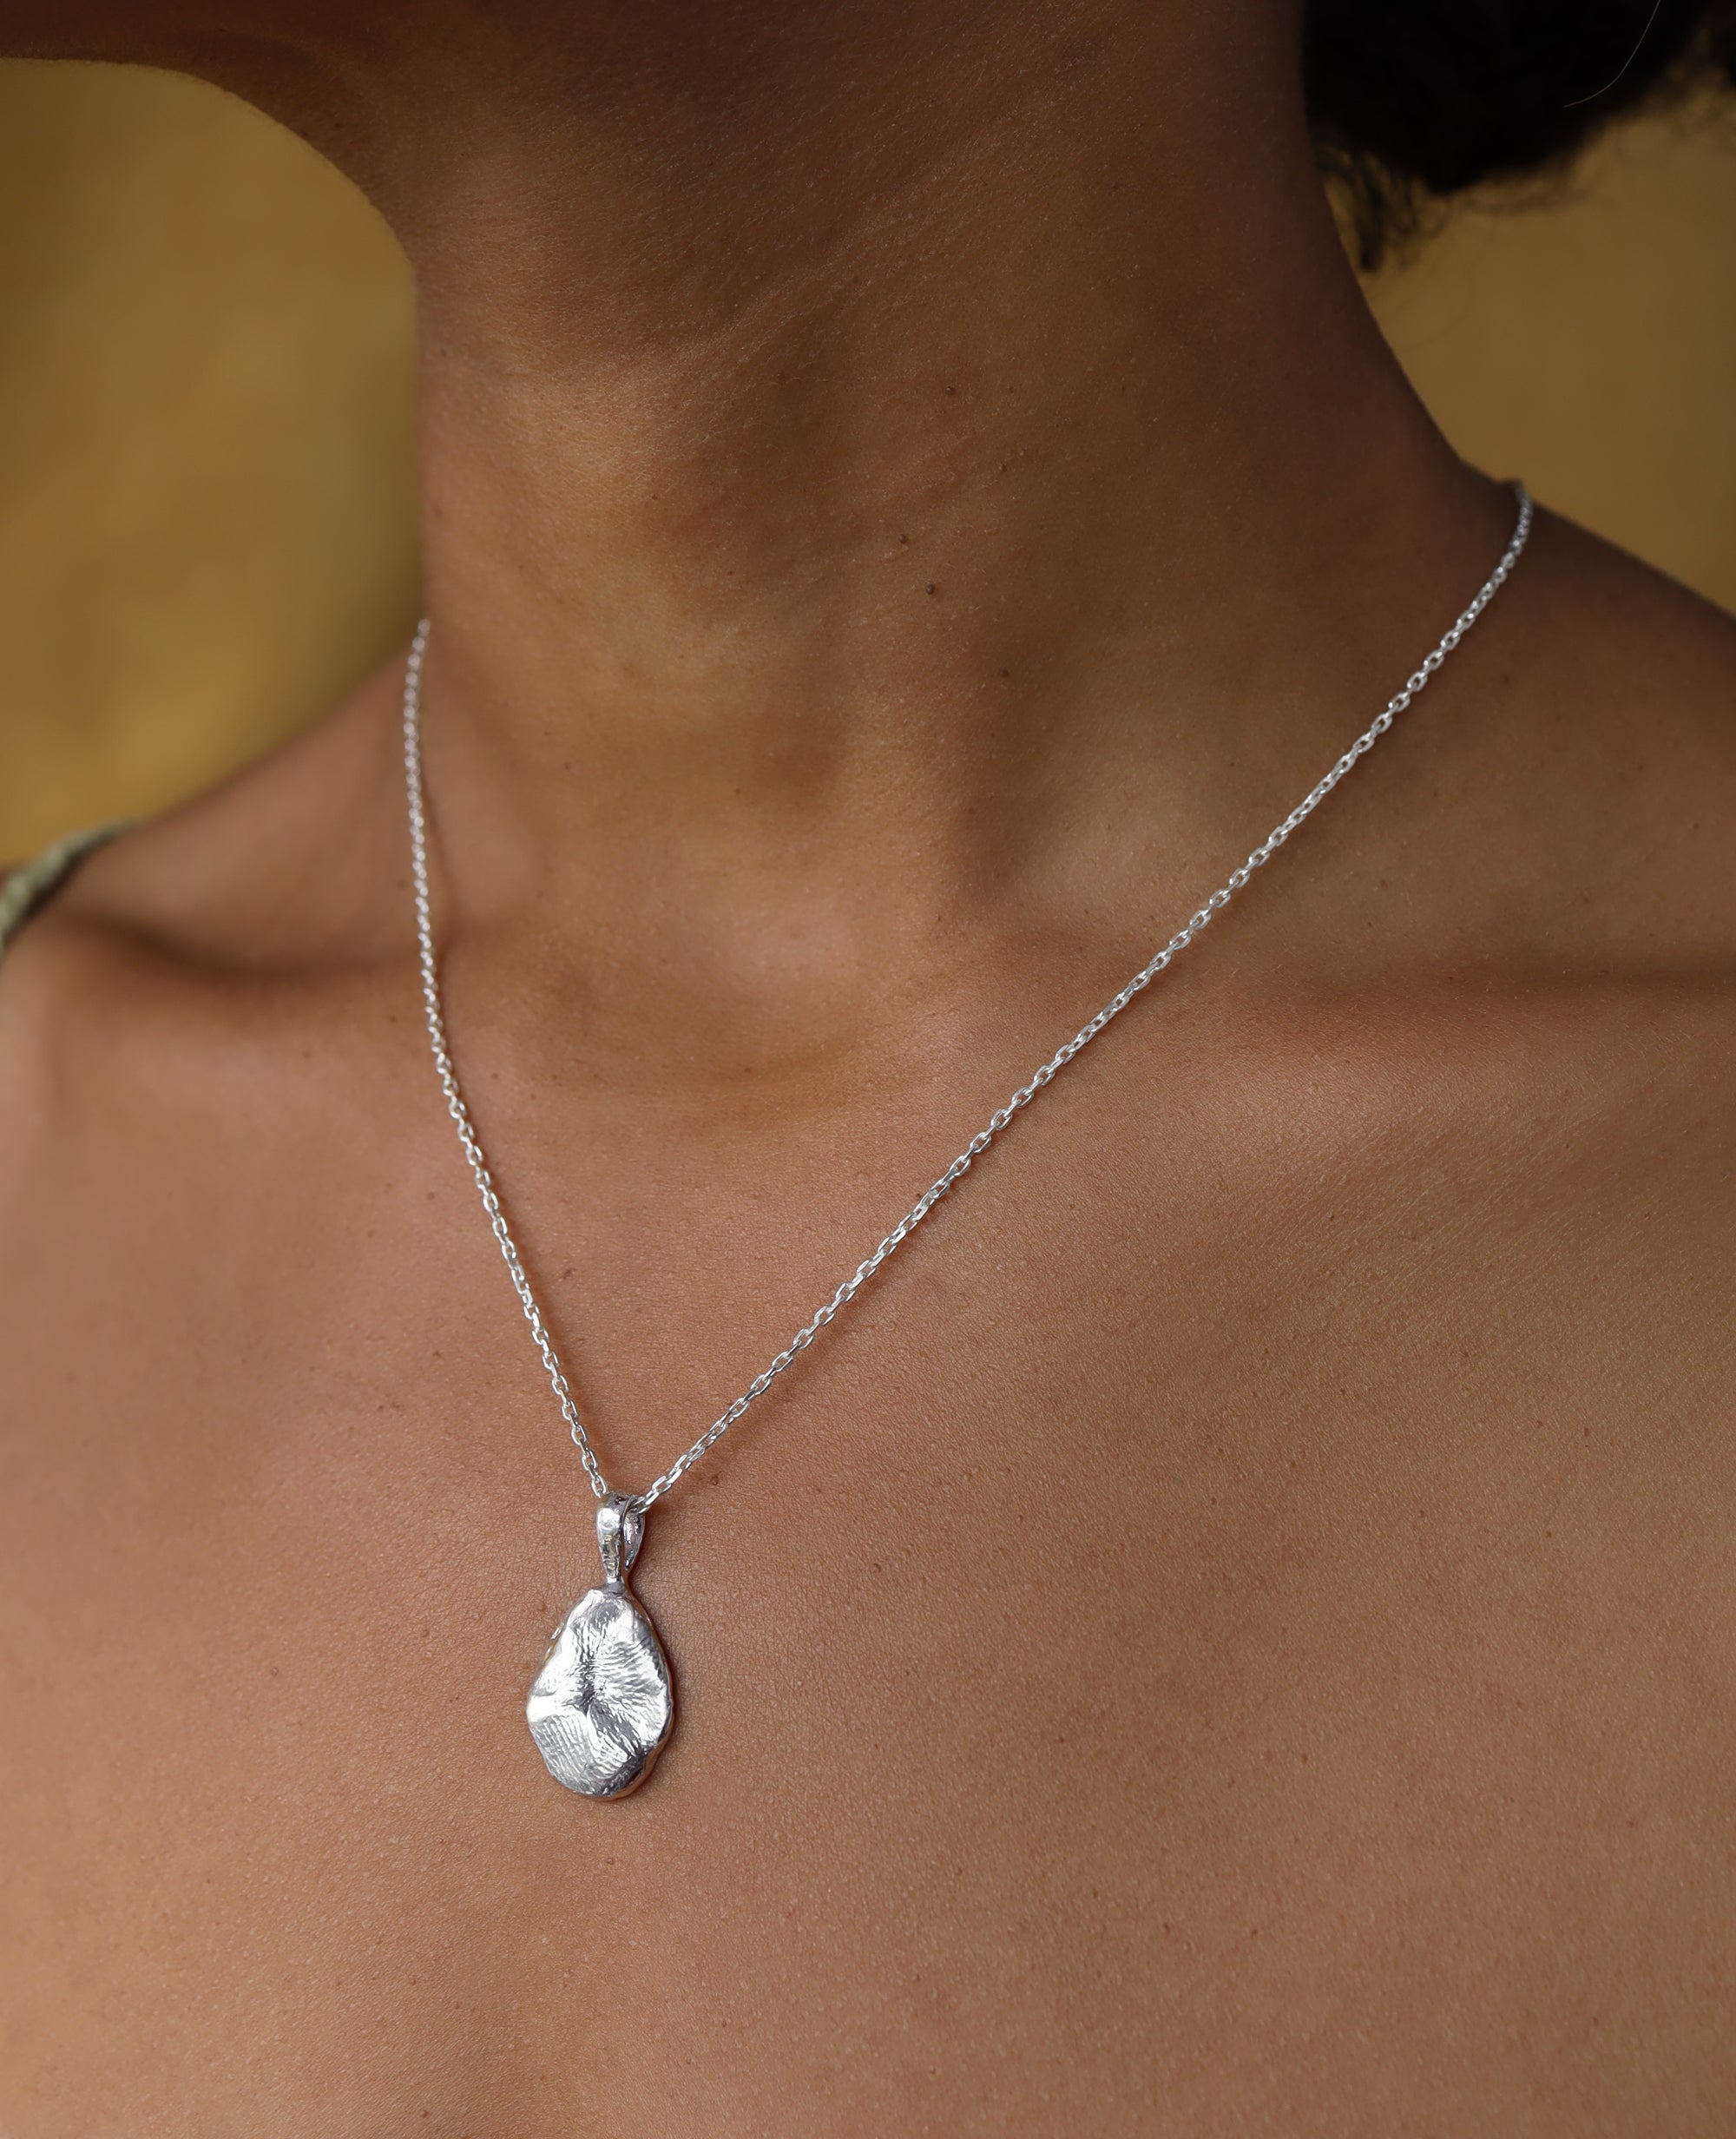 FINGER BLOTCH // silver pendant - ORA-C jewelry - handmade jewelry by Montreal based independent designer Caroline Pham